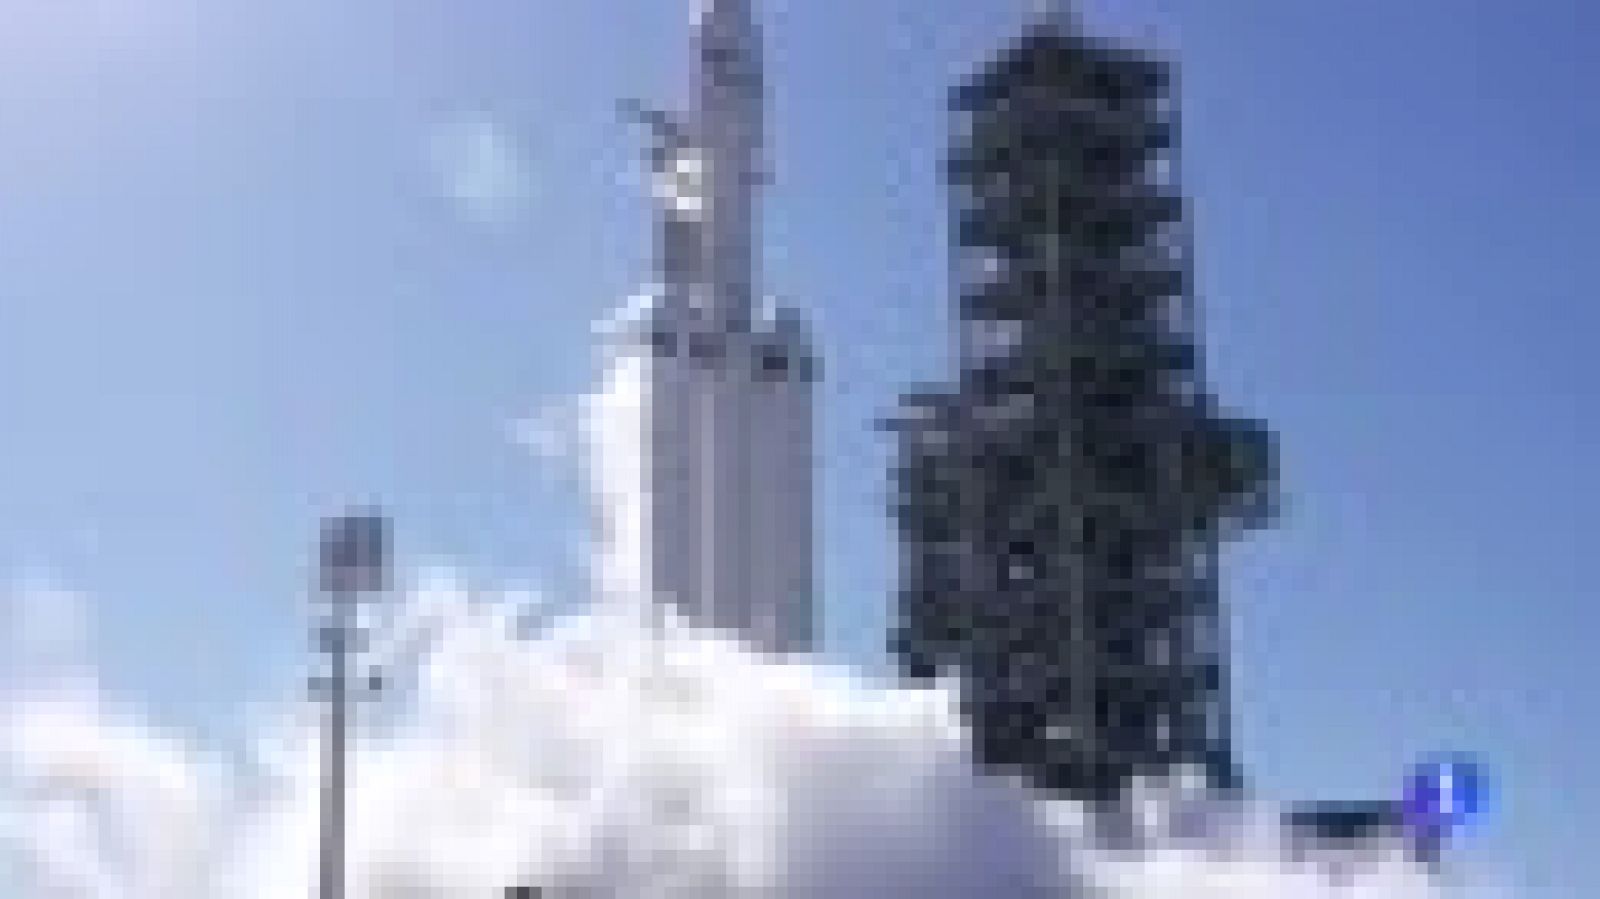 Telediario 1: El supercohete Falcon Heavy inicia su primer vuelo | RTVE Play